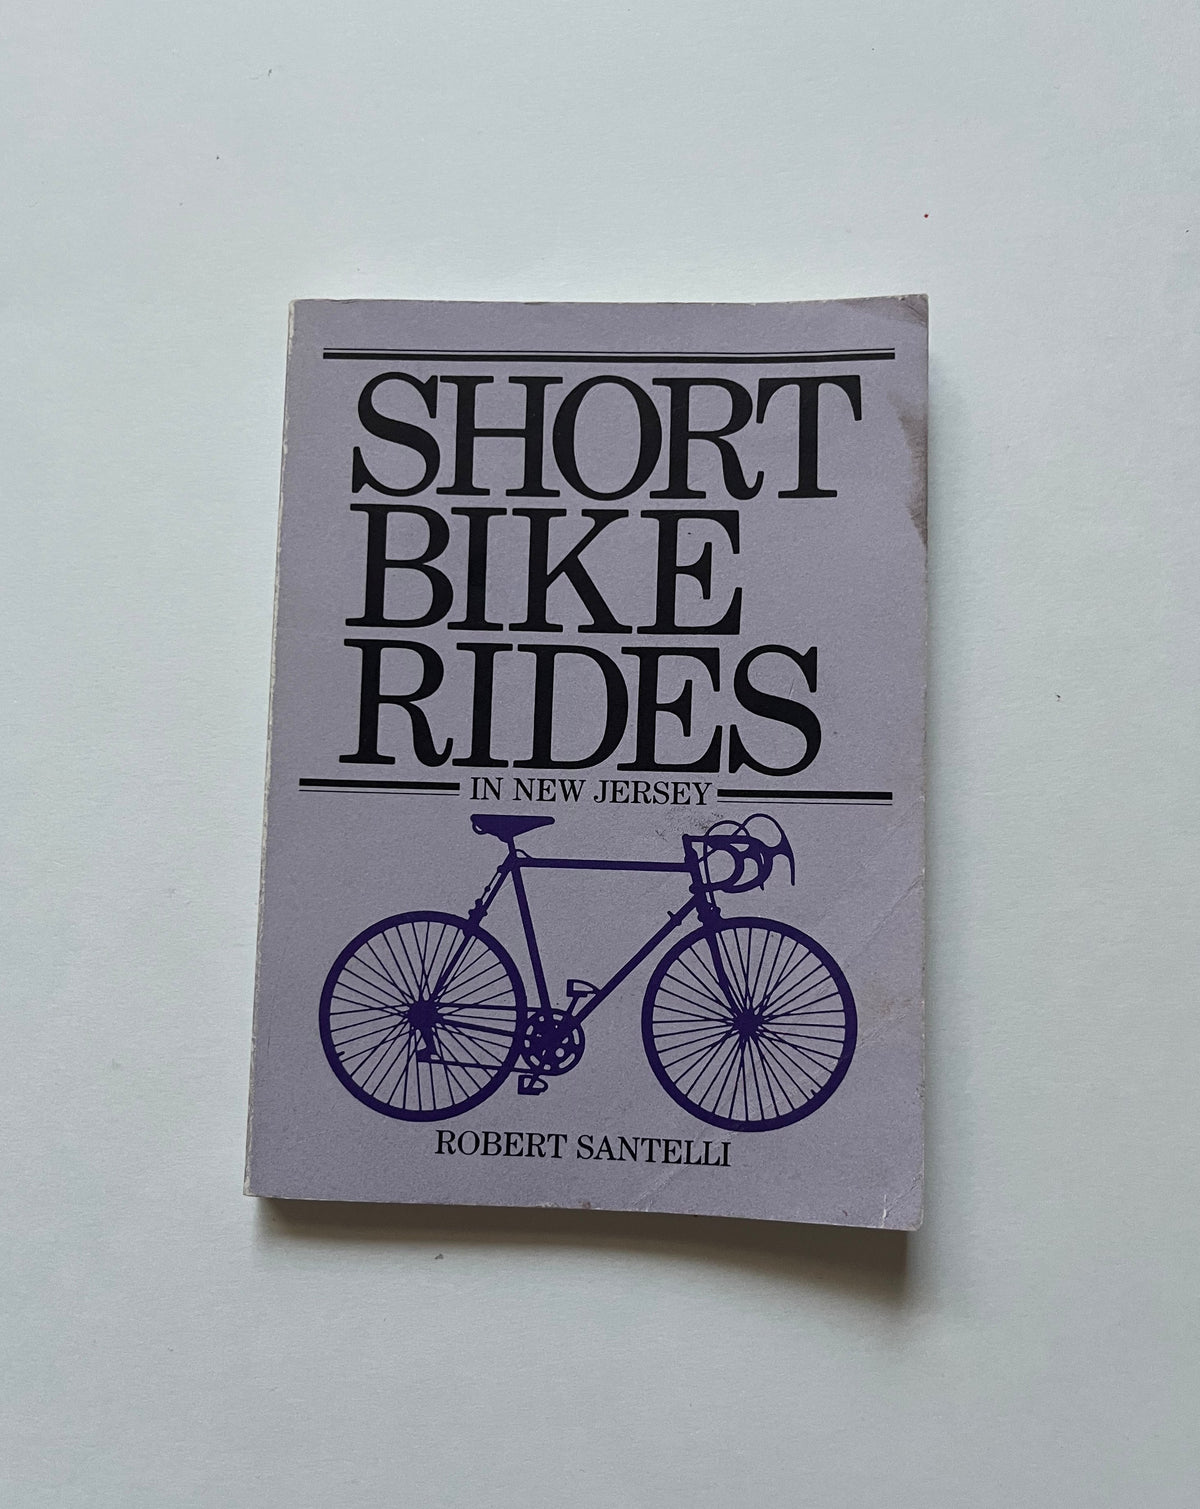 Short Bike Rides in New Jersey by Robert Santelli